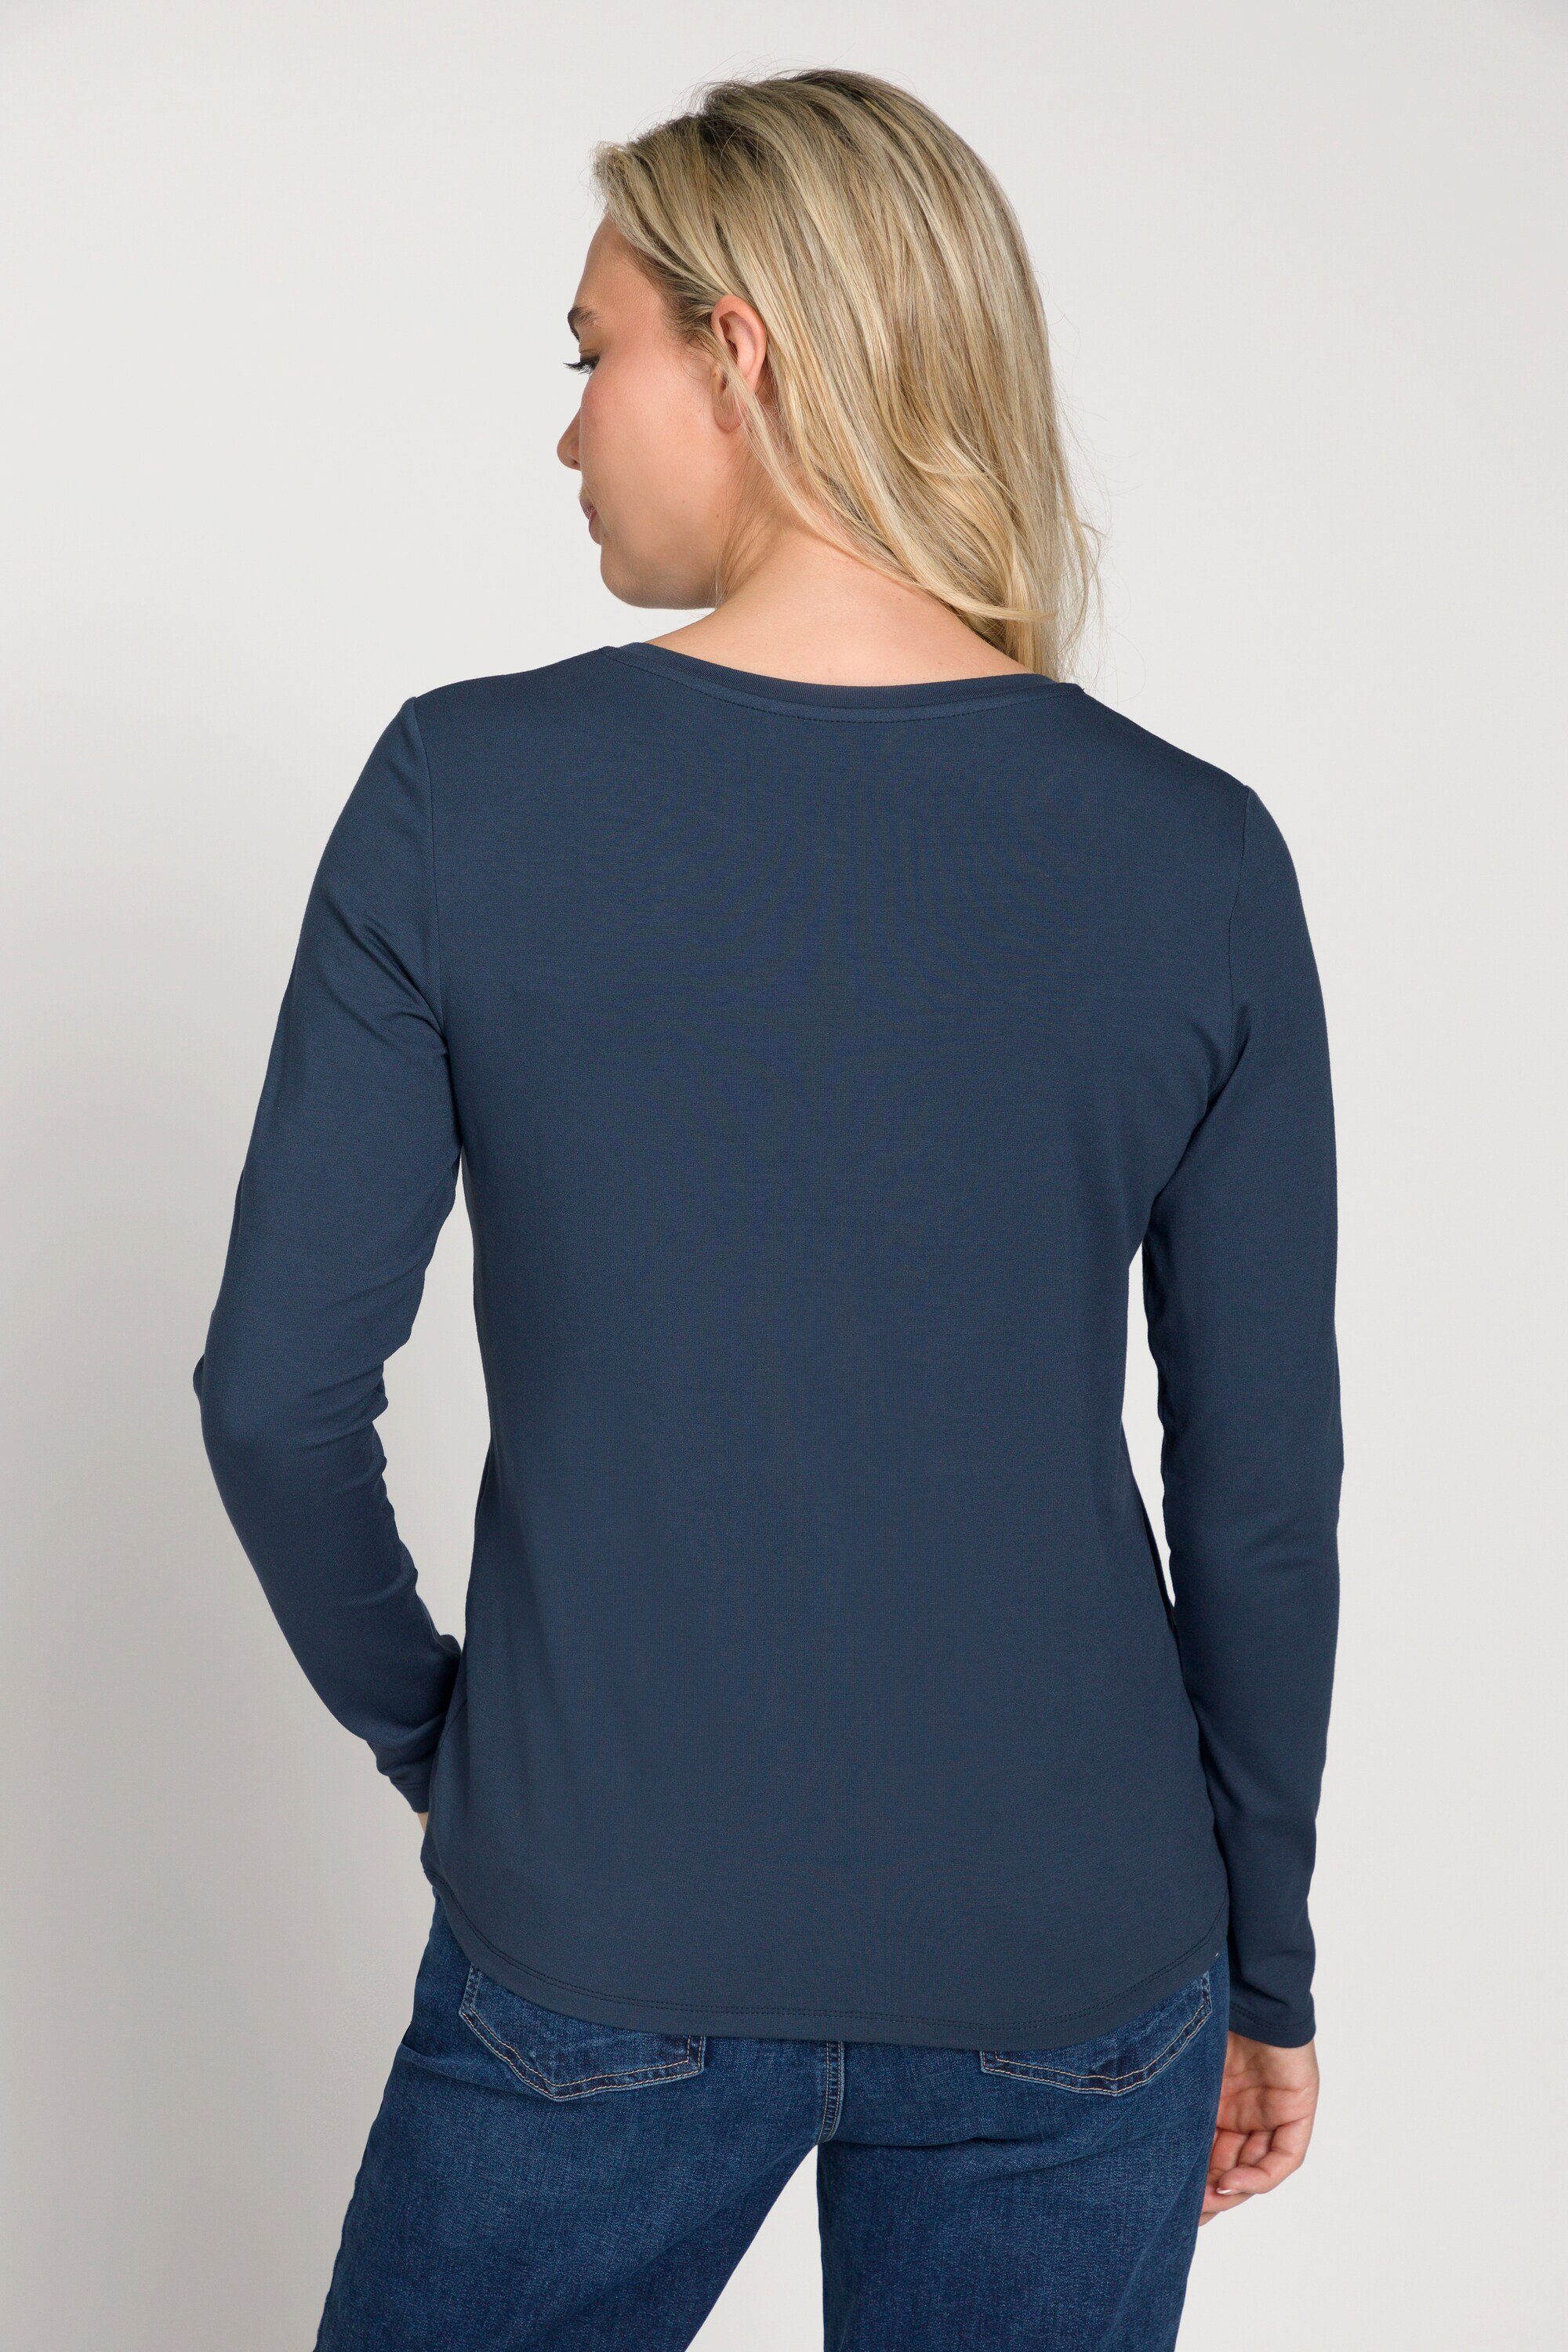 Gina Laura Rundhalsshirt Rundhals dunkelblau "V" mit Langam T-Shirt